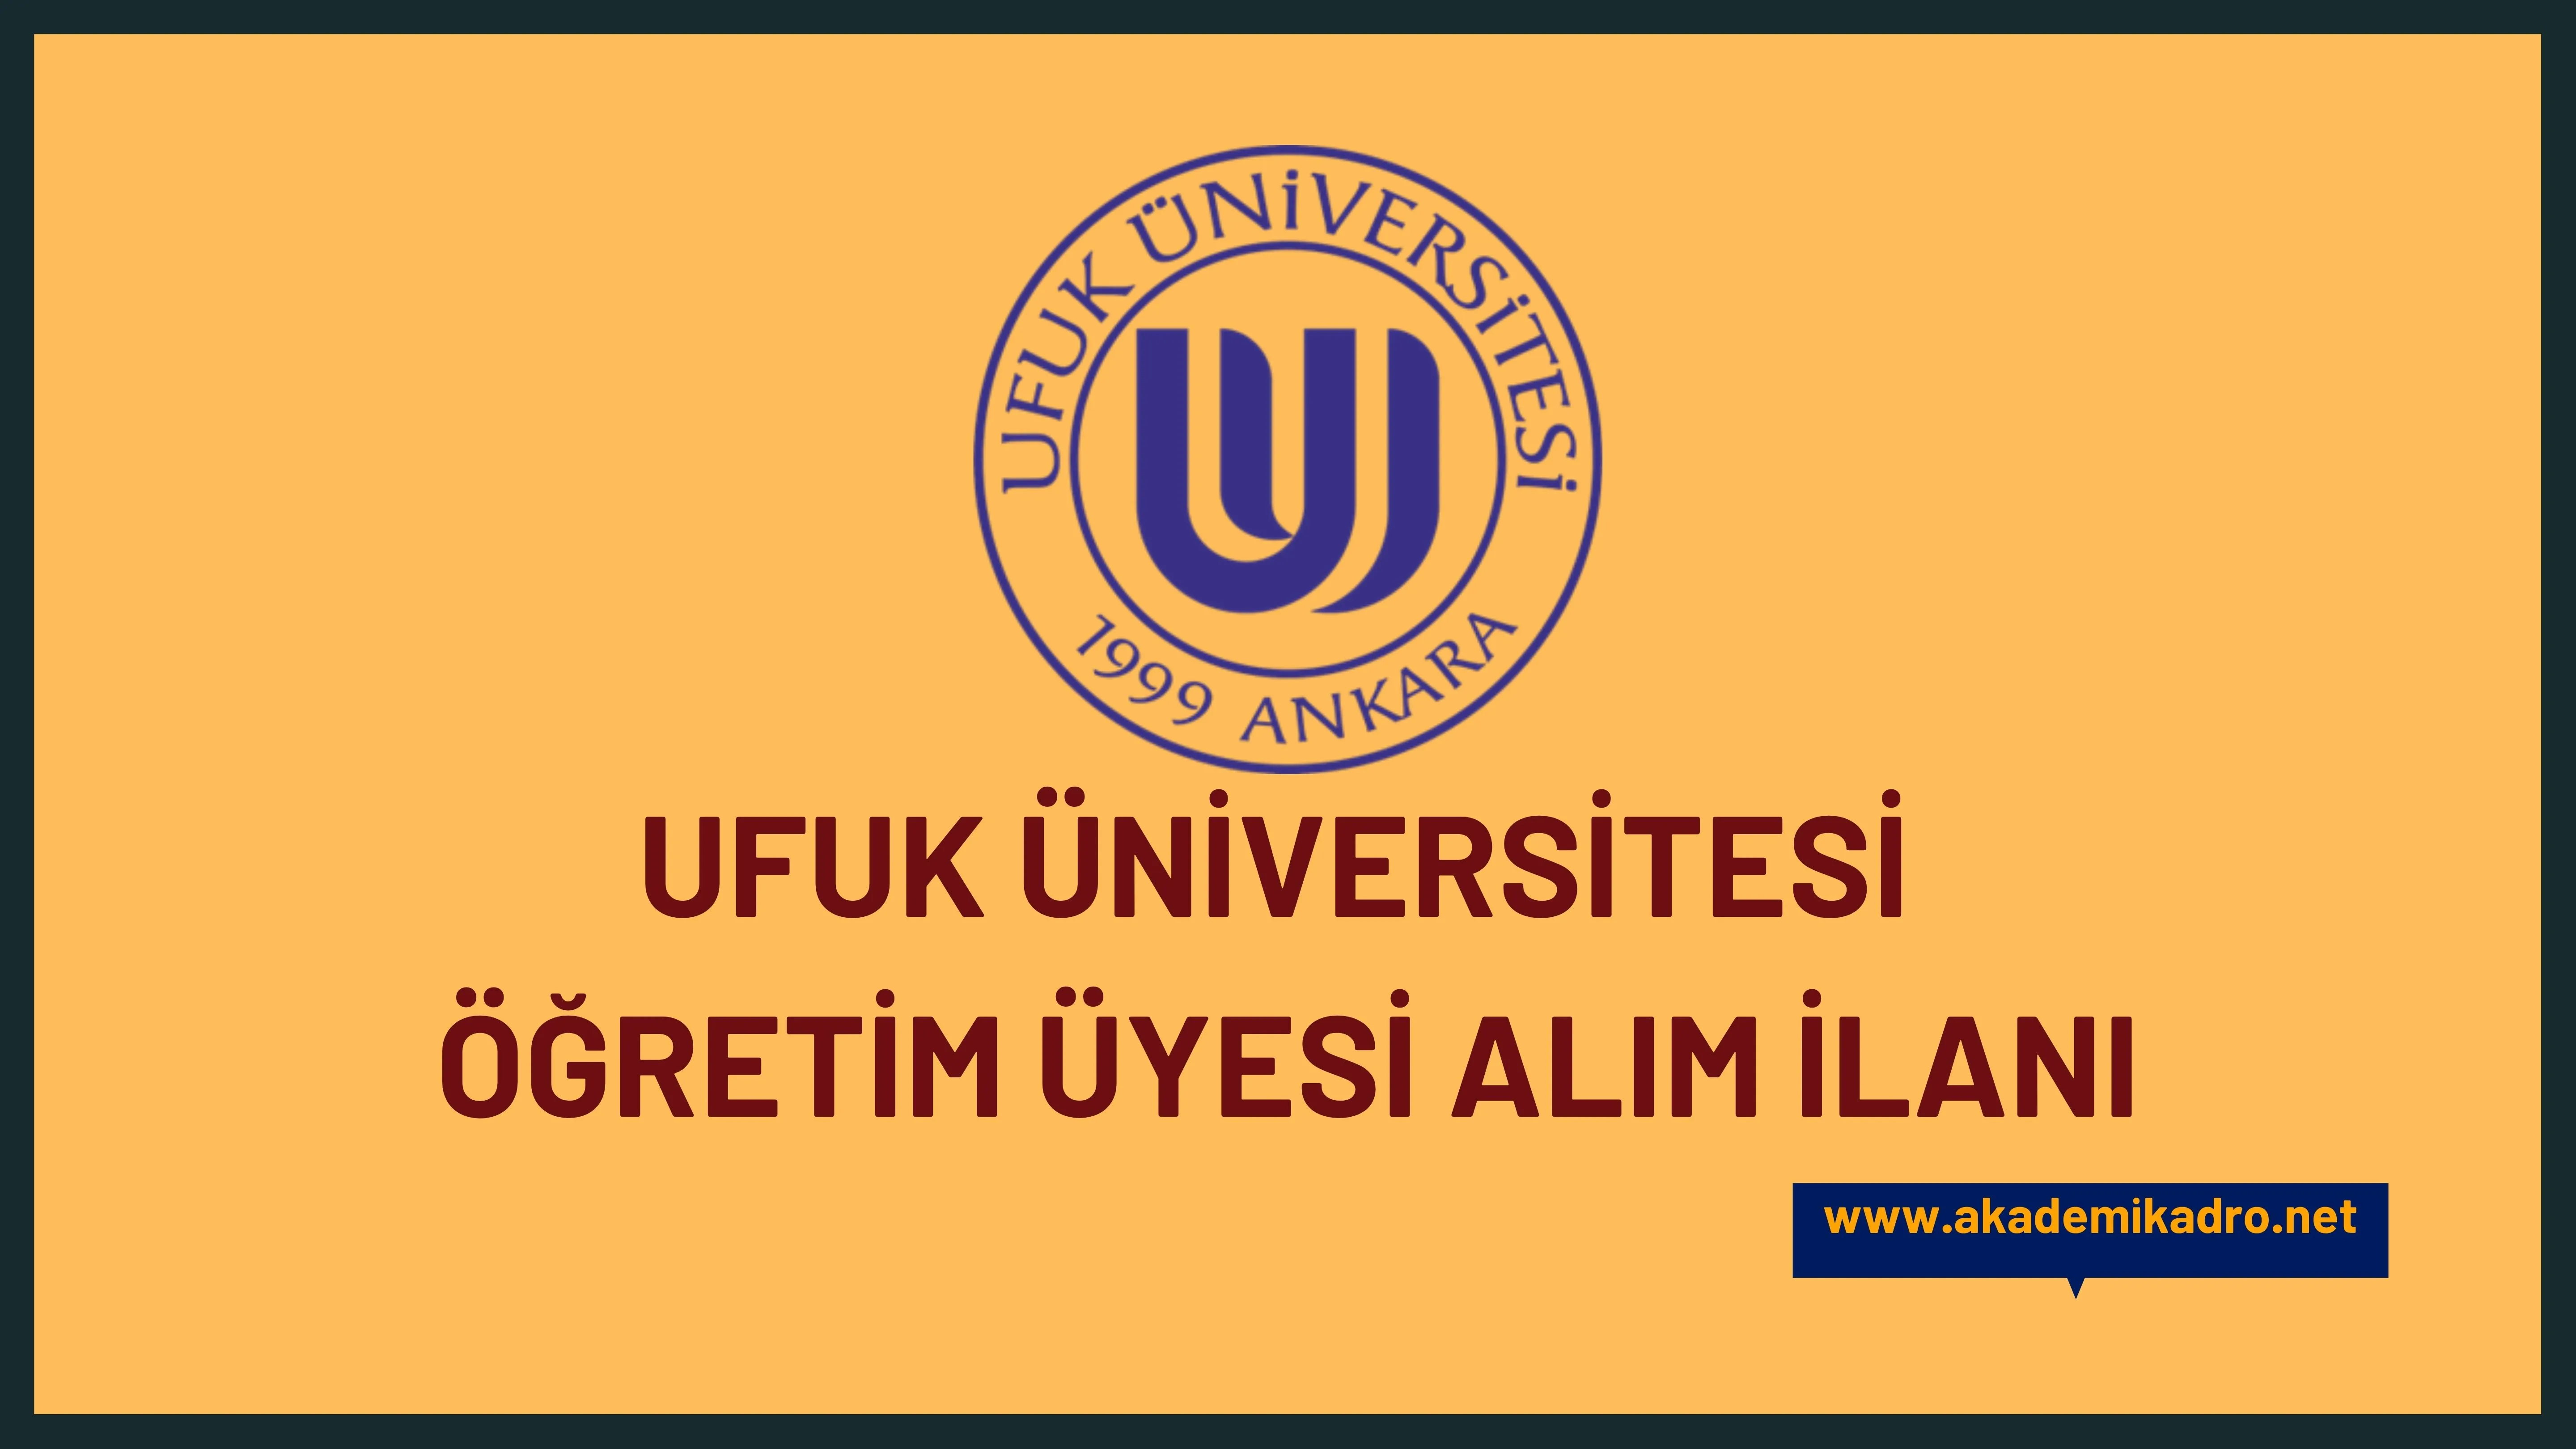 Ufuk Üniversitesi 2 akademik personel alacak.